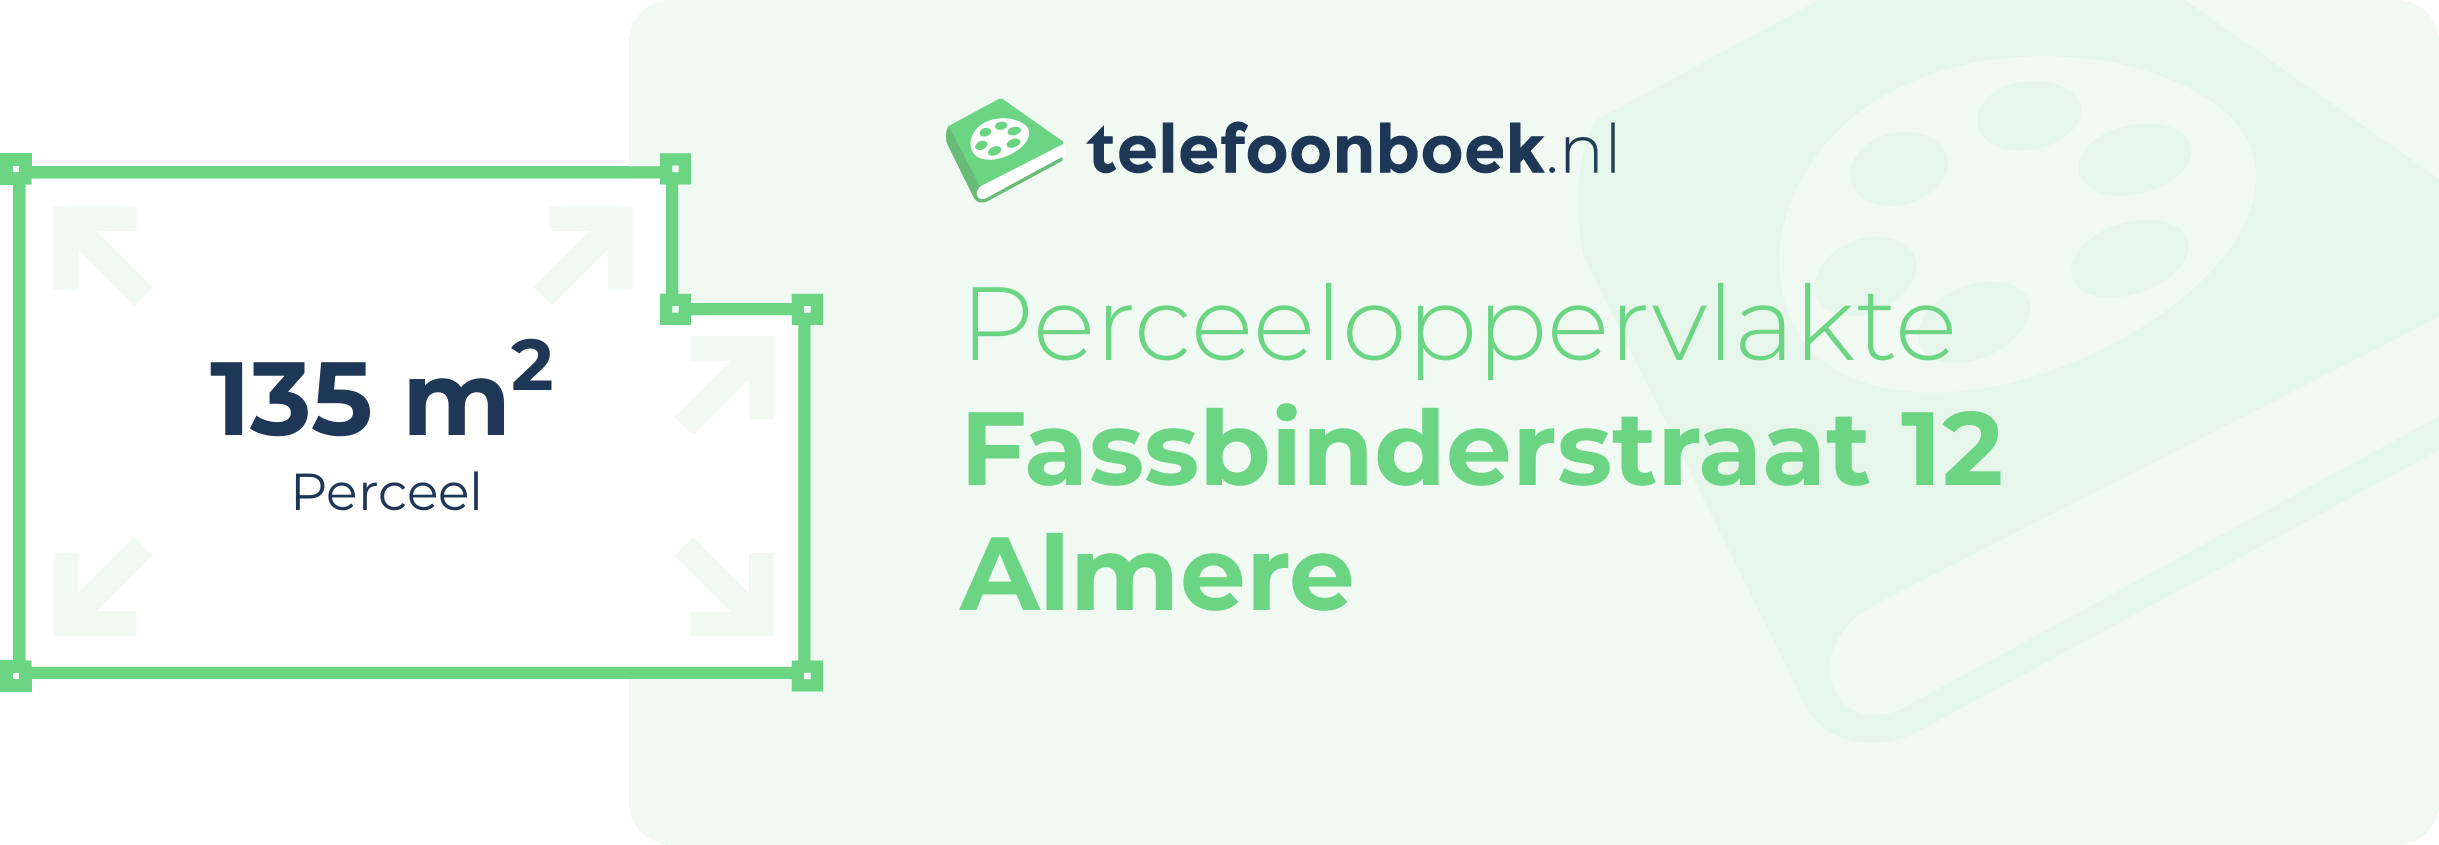 Perceeloppervlakte Fassbinderstraat 12 Almere